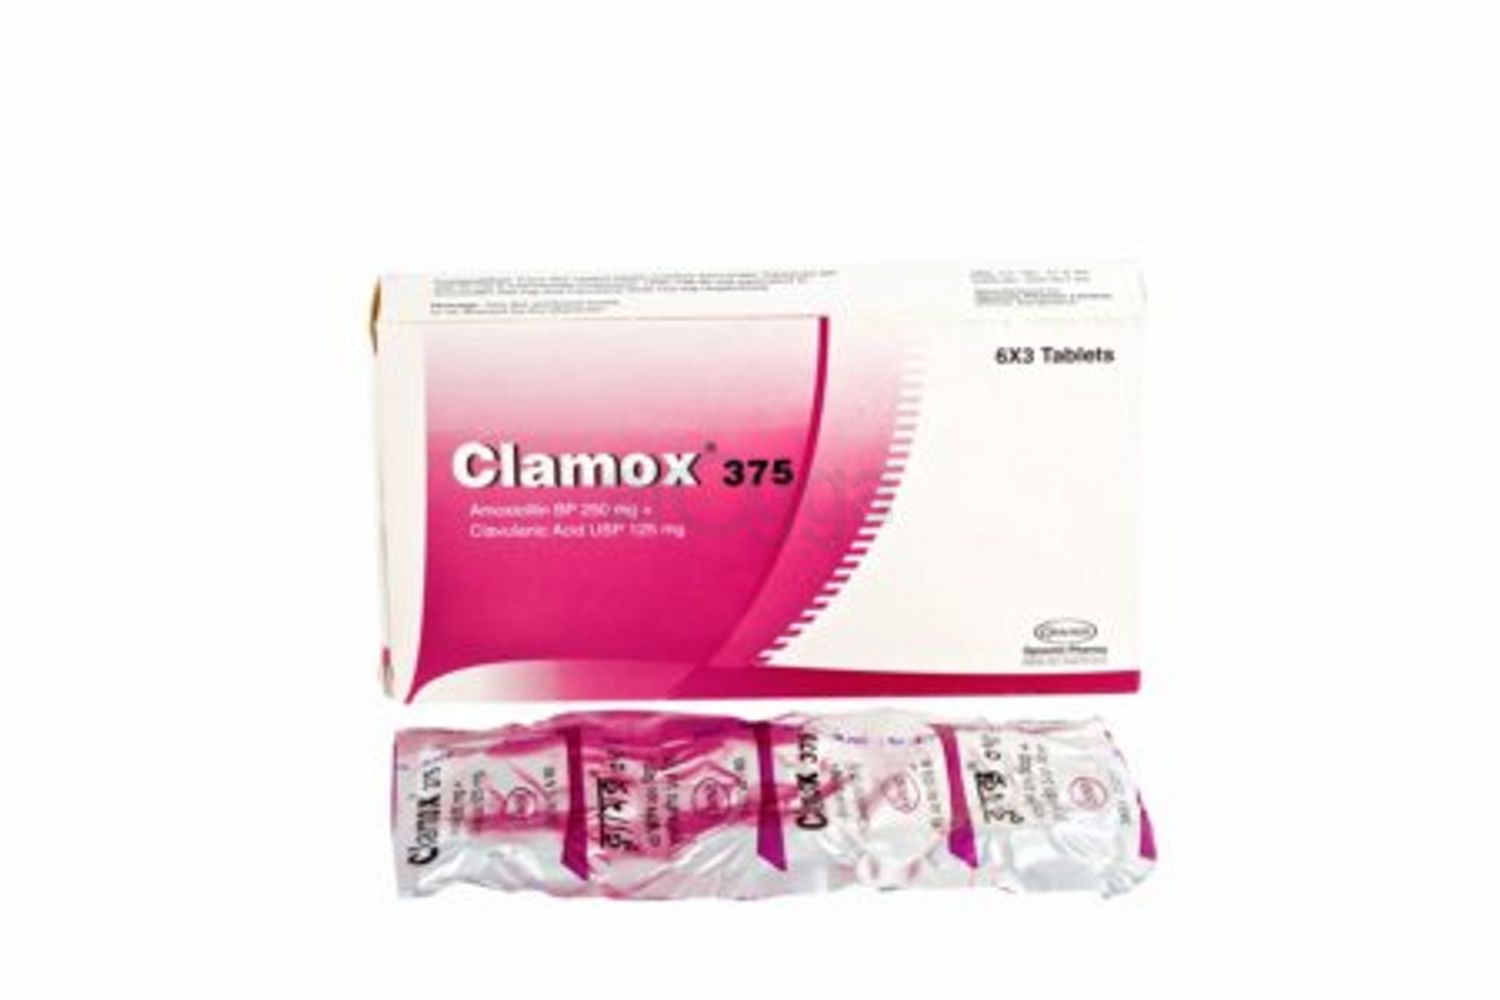 Clamox 375